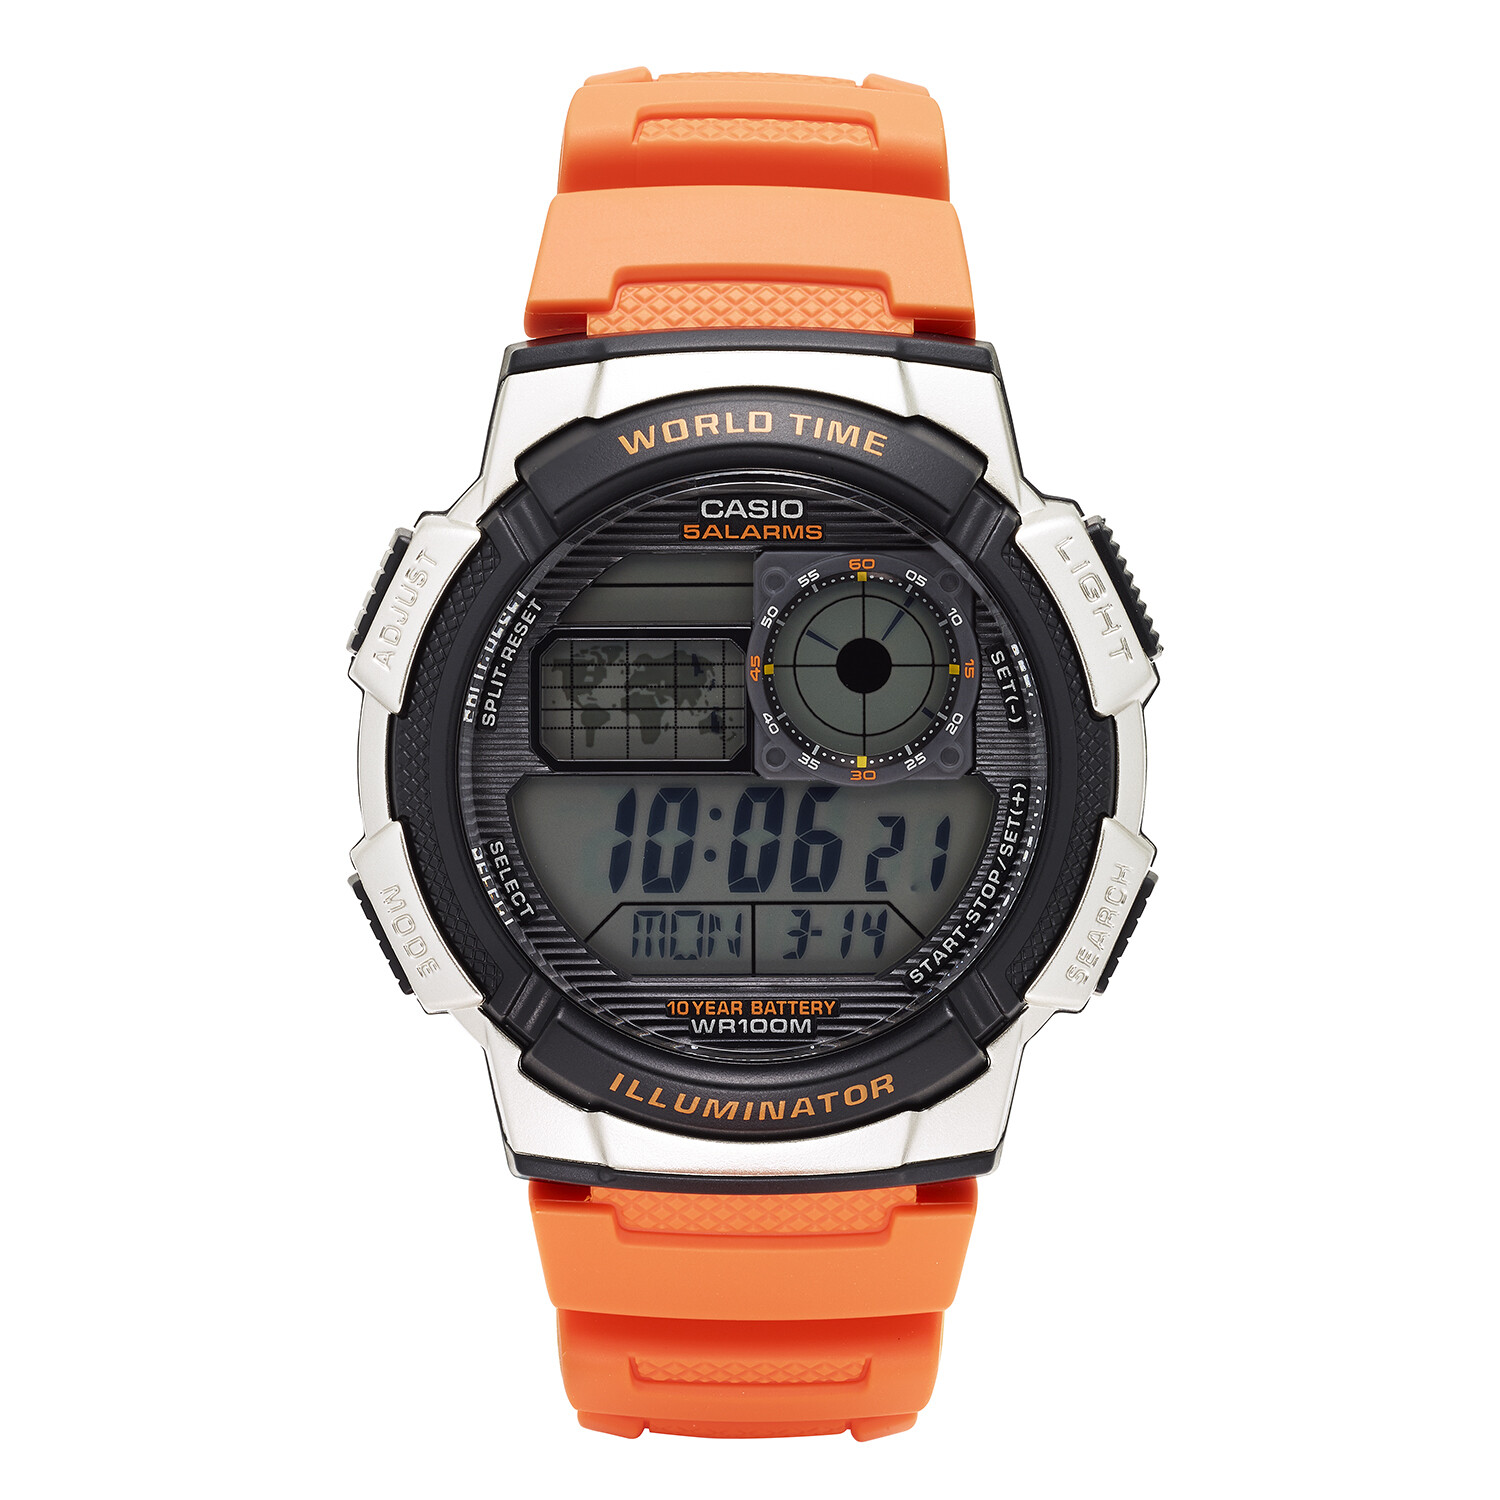 Casio Men's '10-Year Battery' Quartz Resin Casual Watch, Color Orange (Model: AE-1000W-4BVCF)